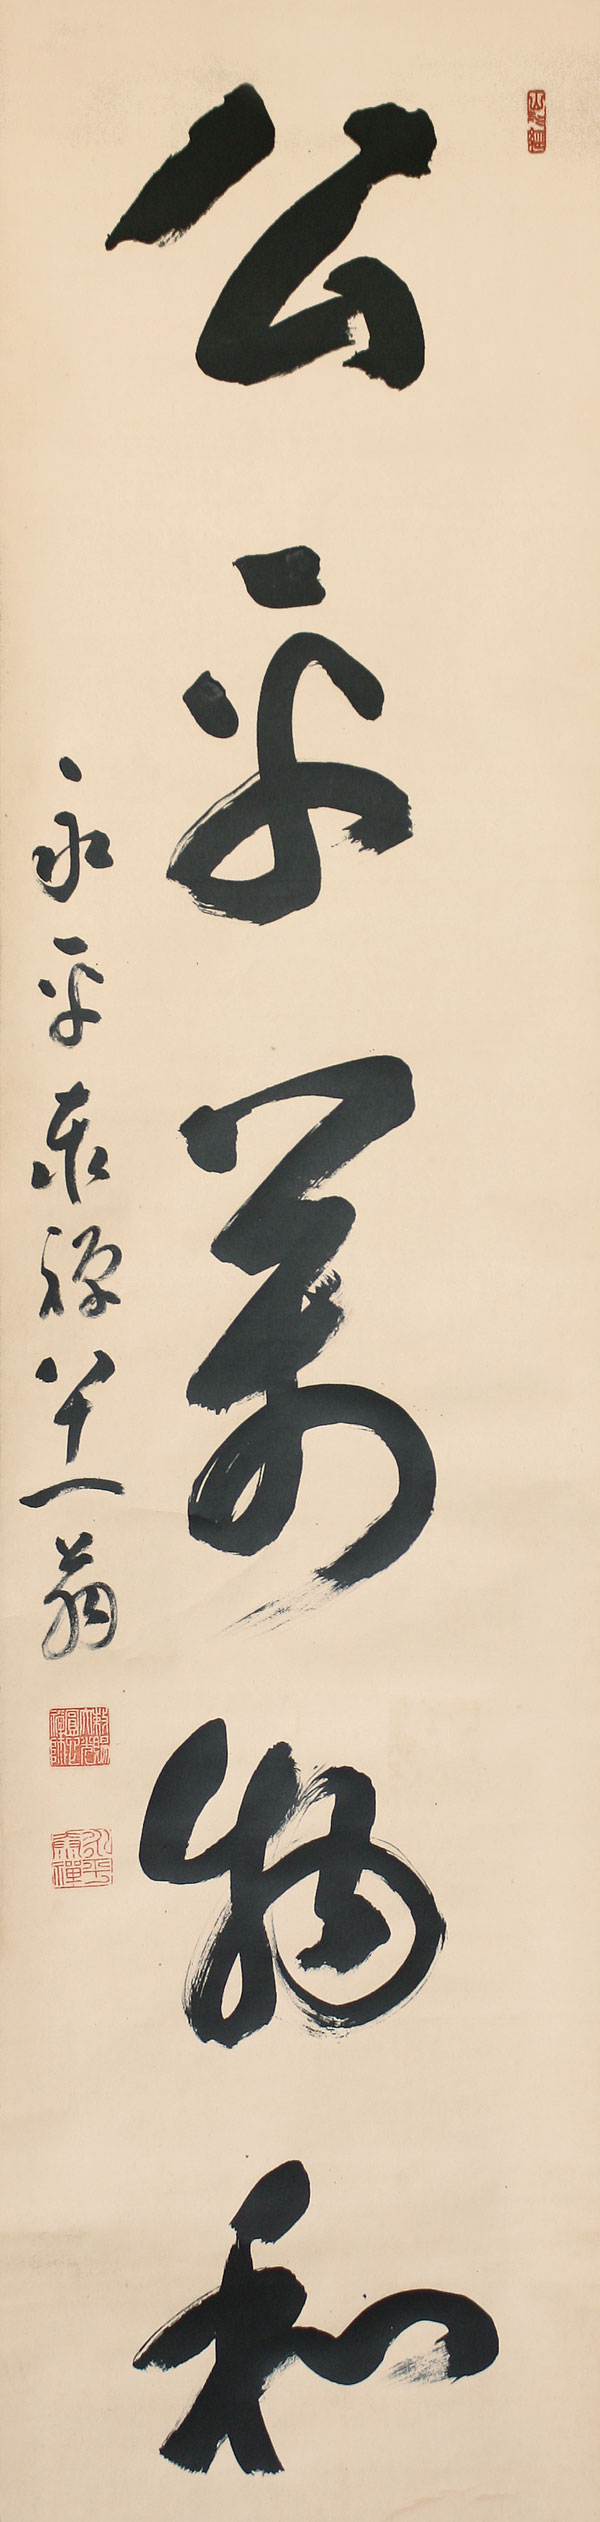 Soto-Sektenpriester-Calligraphy-Japan